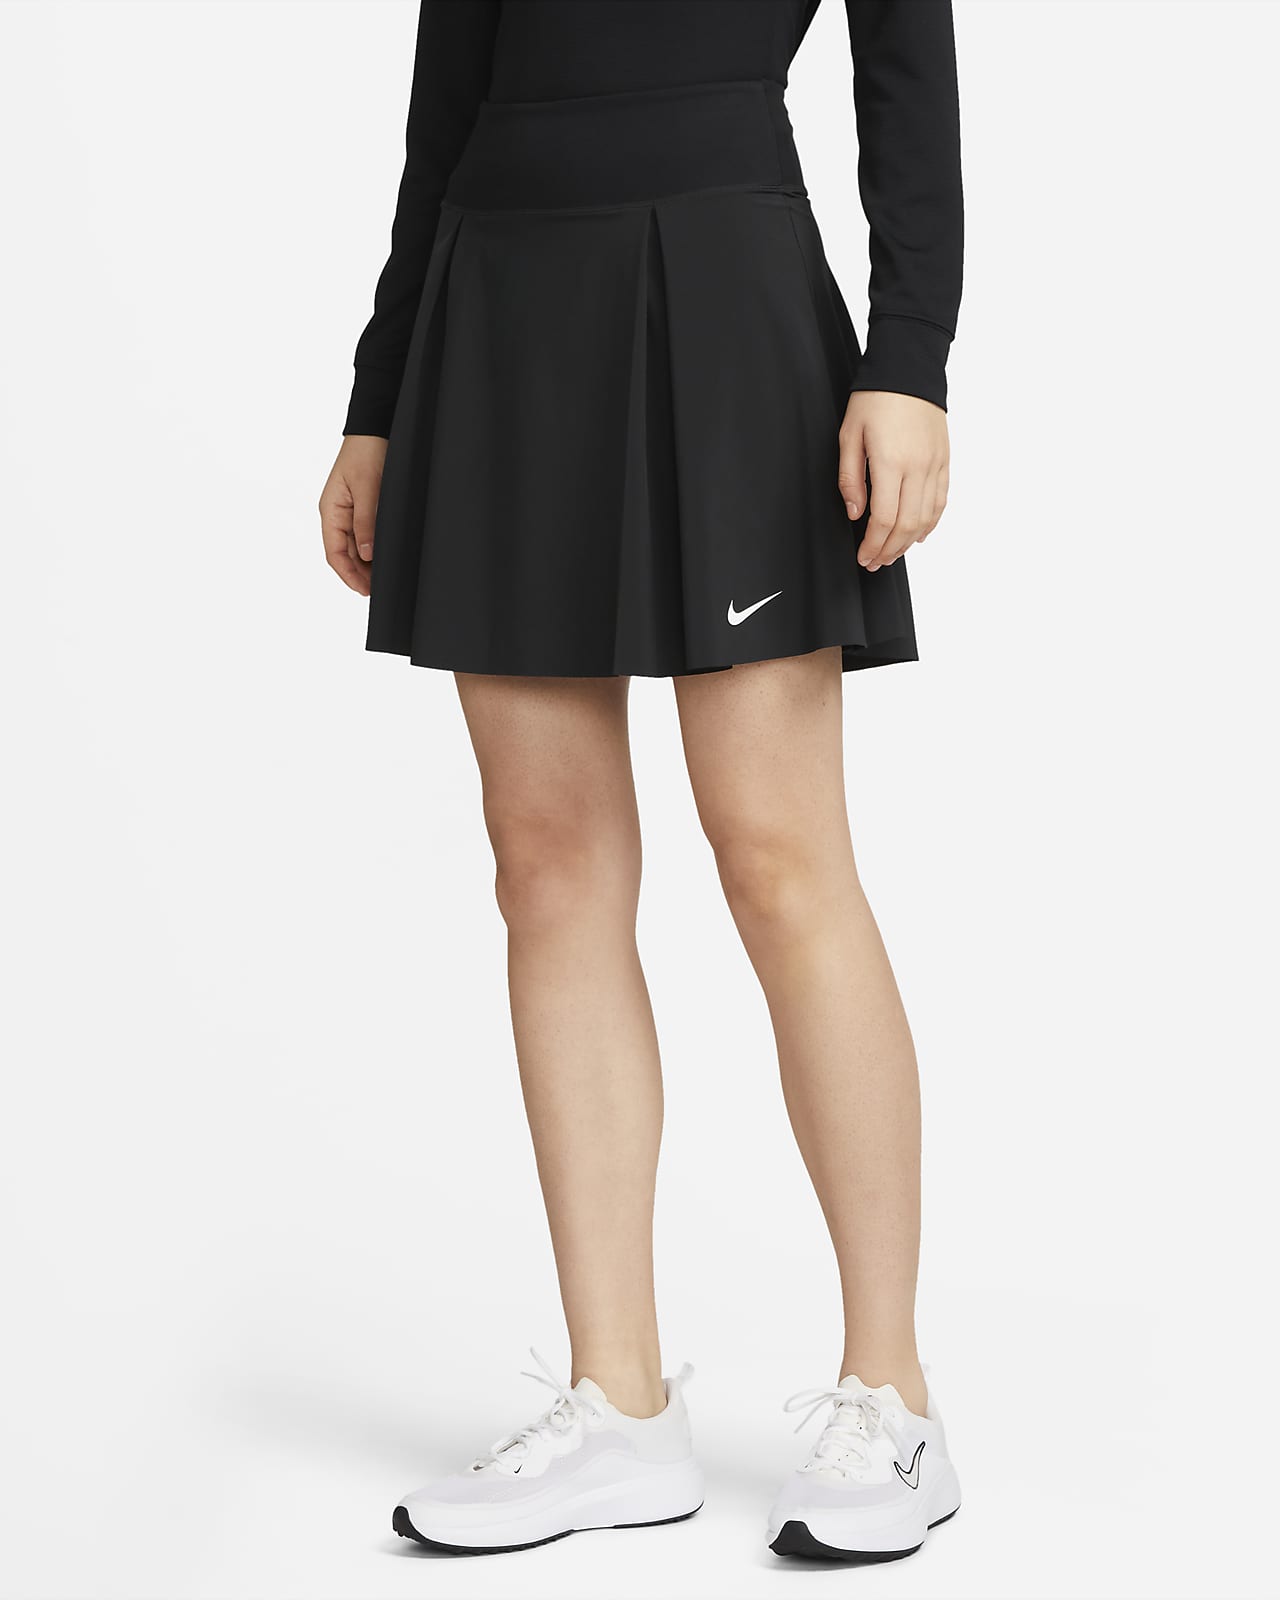 Nike Dri-FIT Advantage Women's Long Golf Skirt